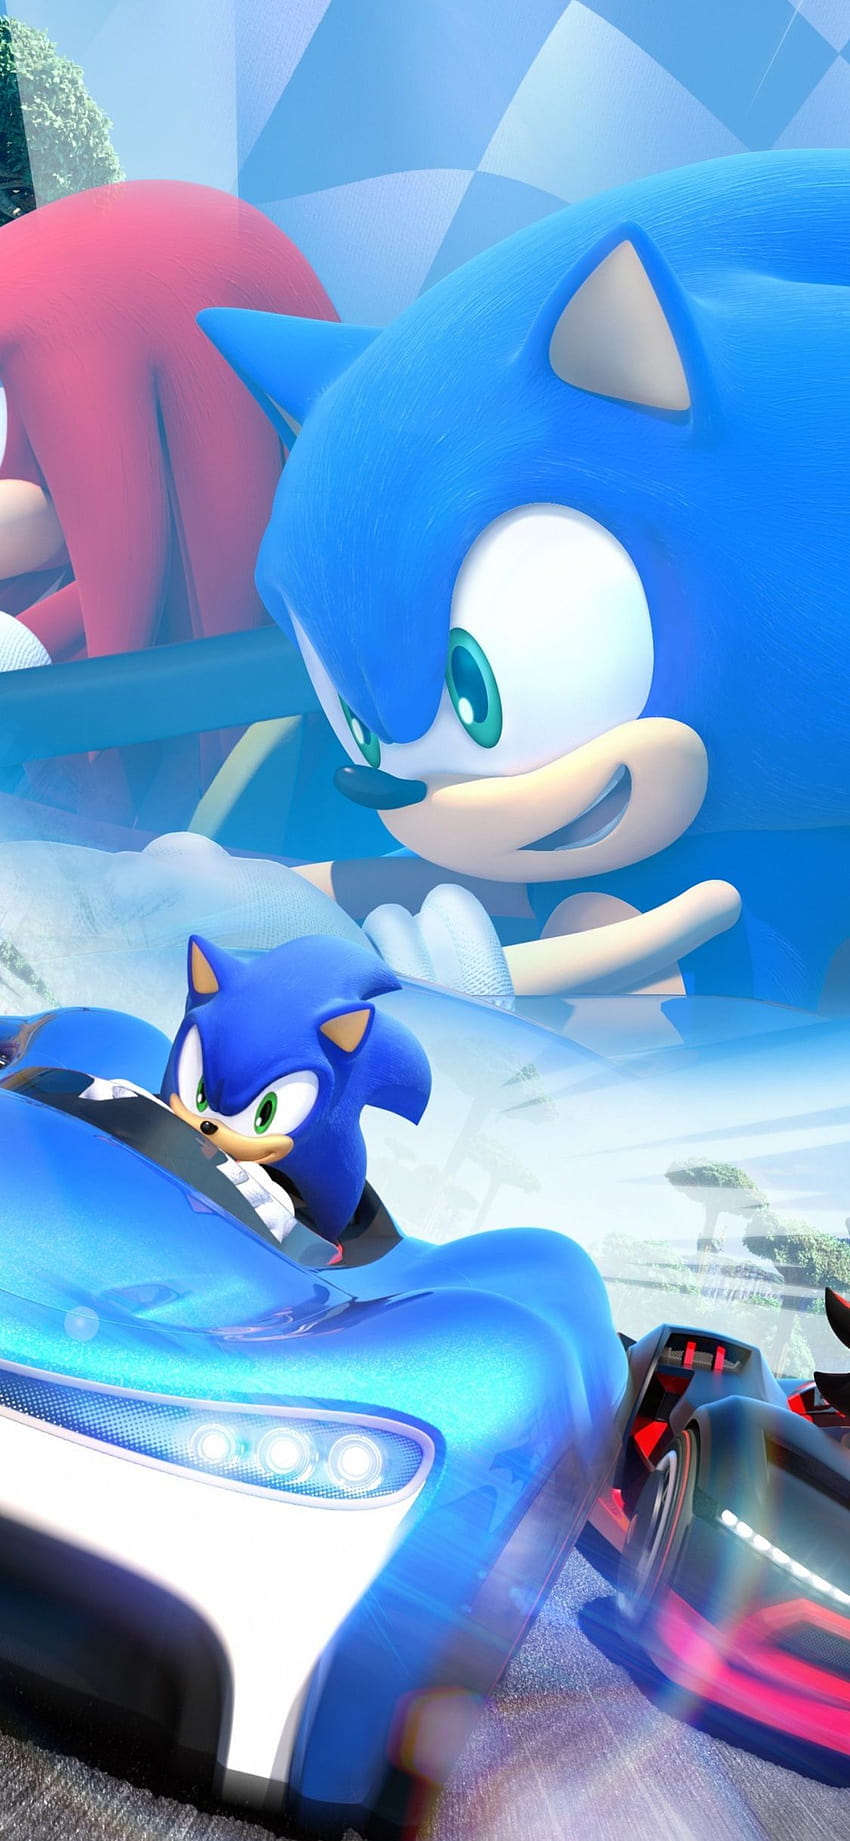 Sonic The Hedgehog, Videojuego, Kart Racing Game, Nintendo, sonic the hedgehog iphone fondo de pantalla del teléfono